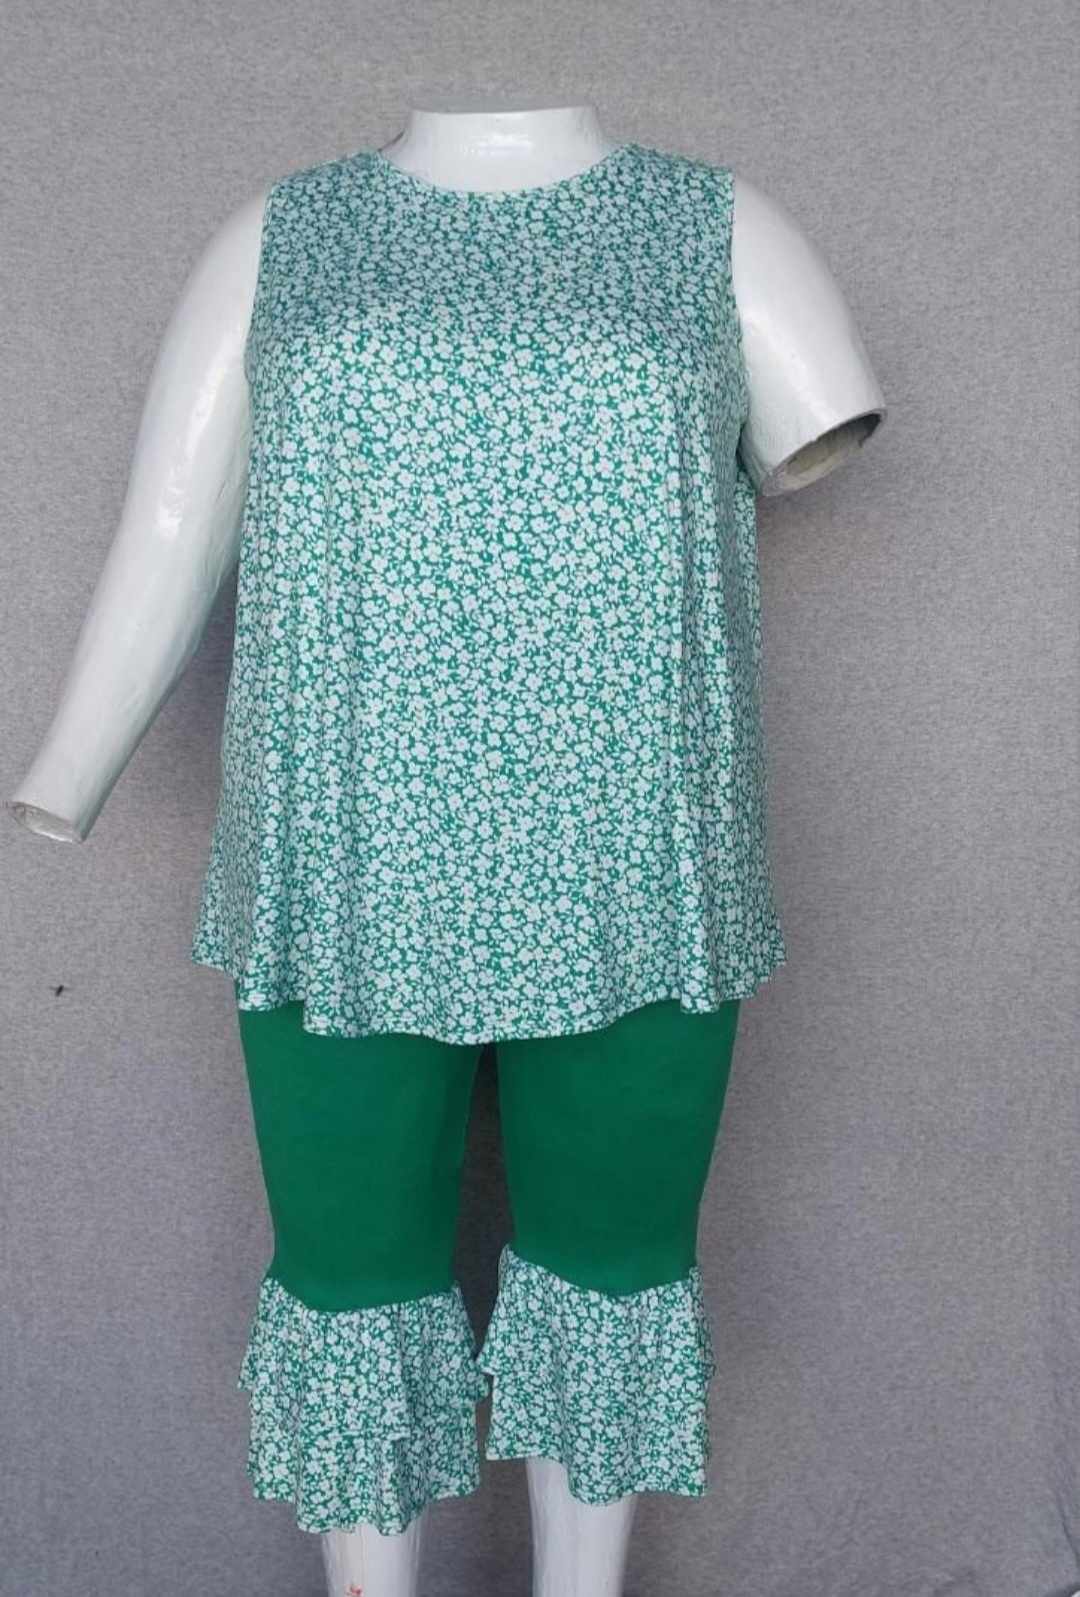 PSFU 2 Piece Green Floral Outfit Rank & Capri Set